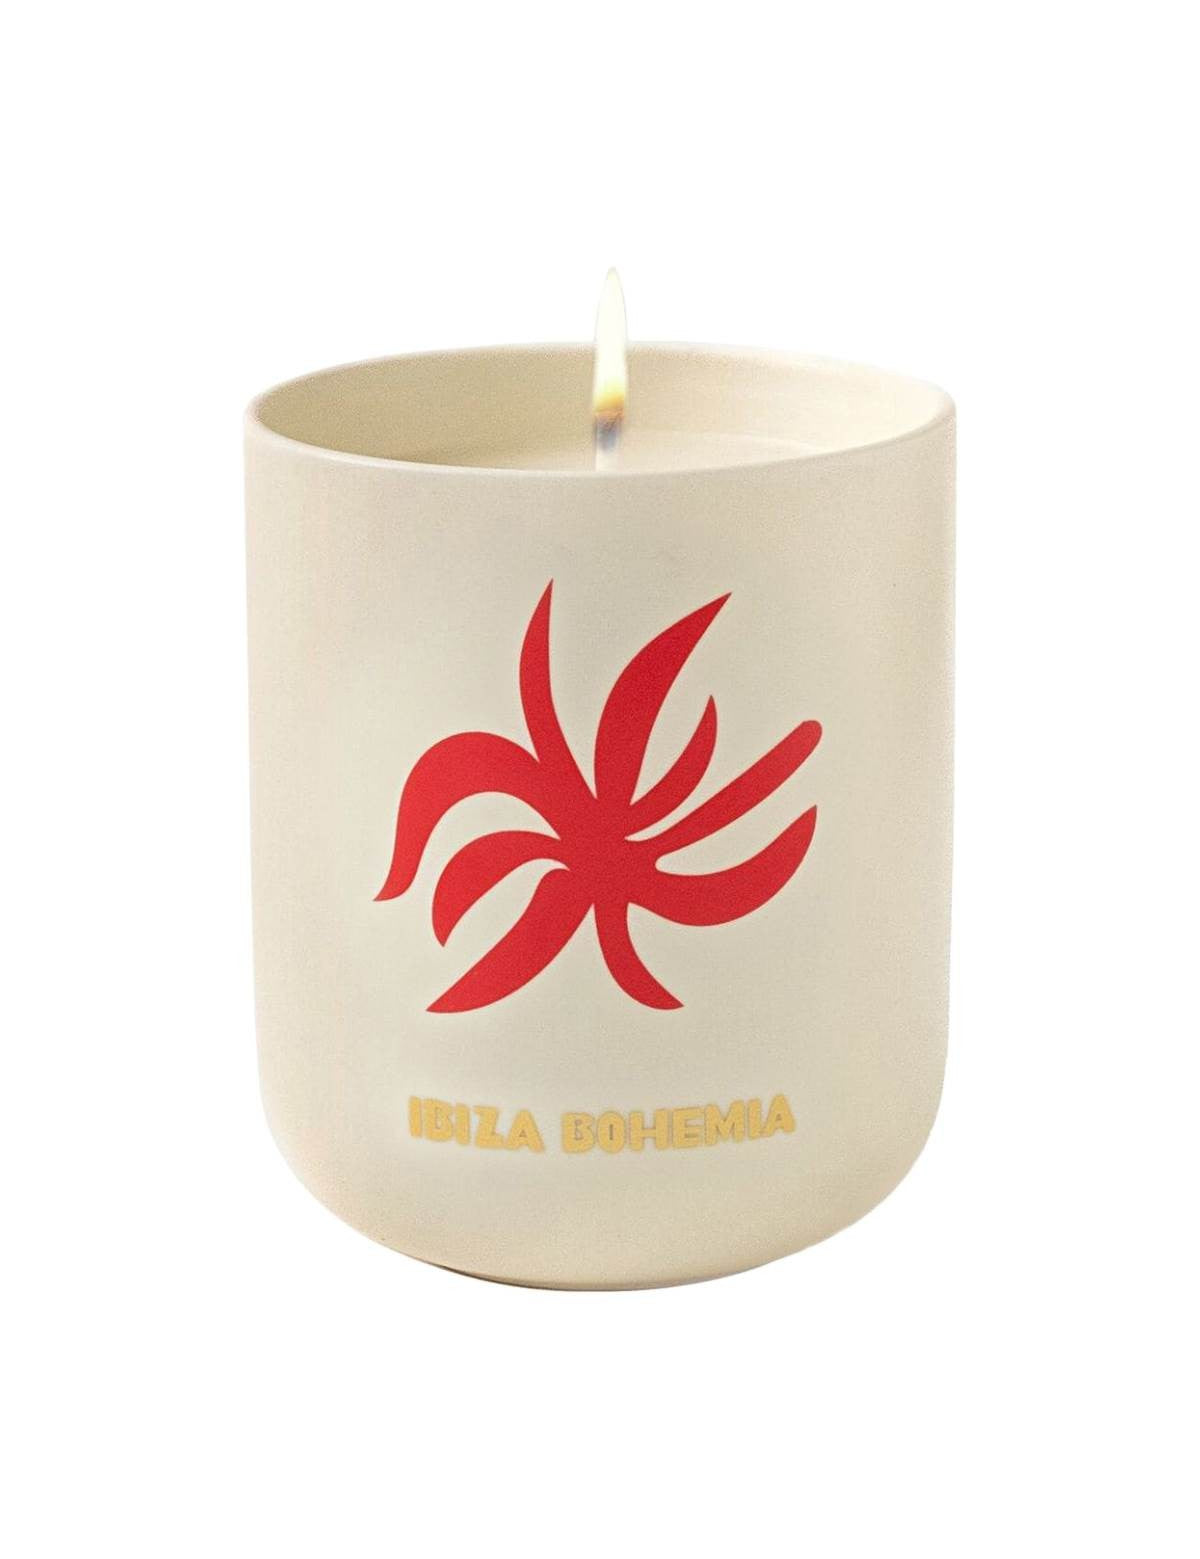 assouline-ibiza-bohemia-scented-candle.jpg